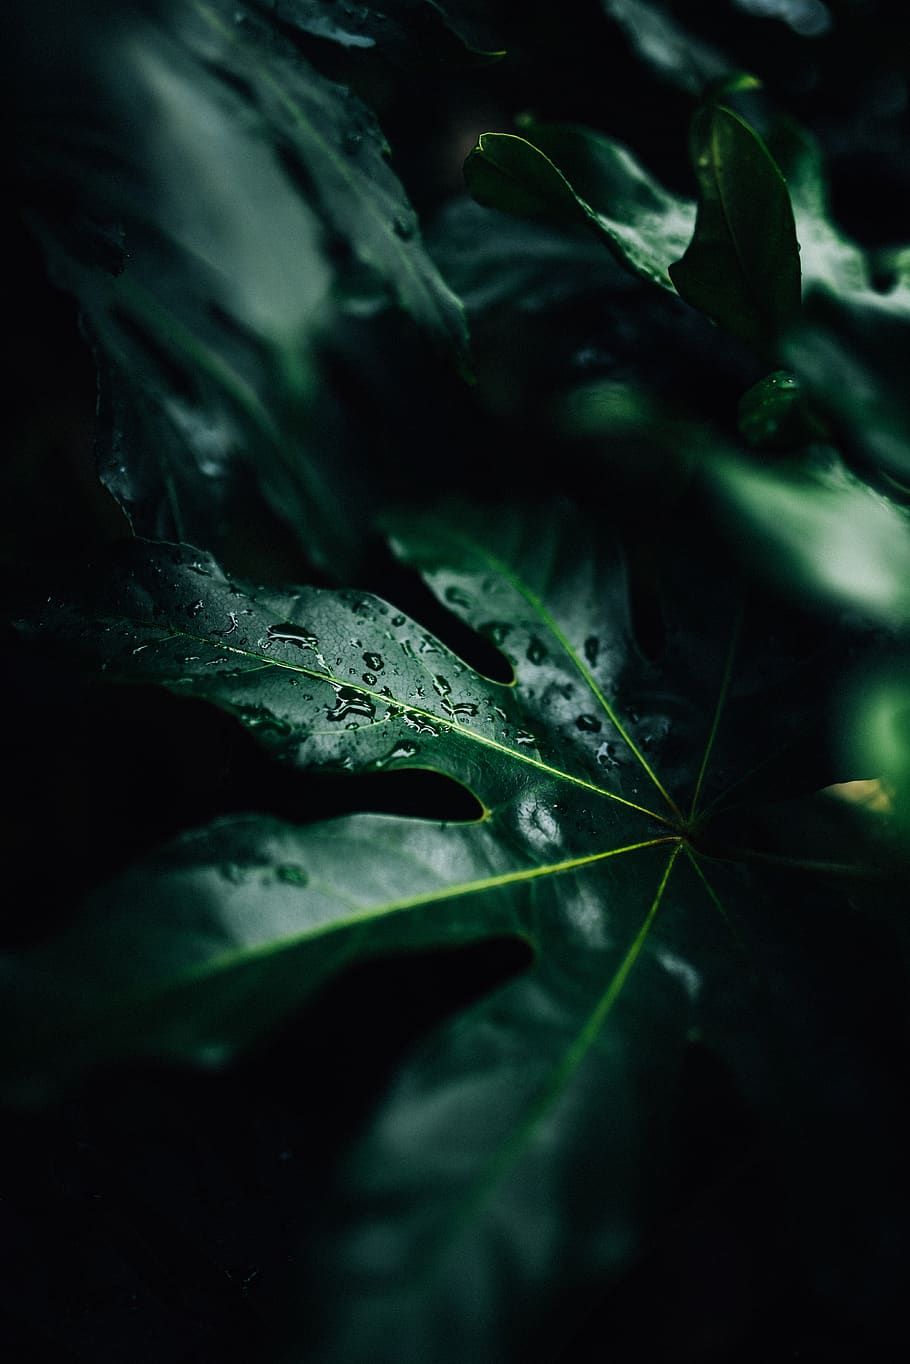 dark, green, leaf, plant, nature, blur, outdoor, plant part, close-up, selective focus